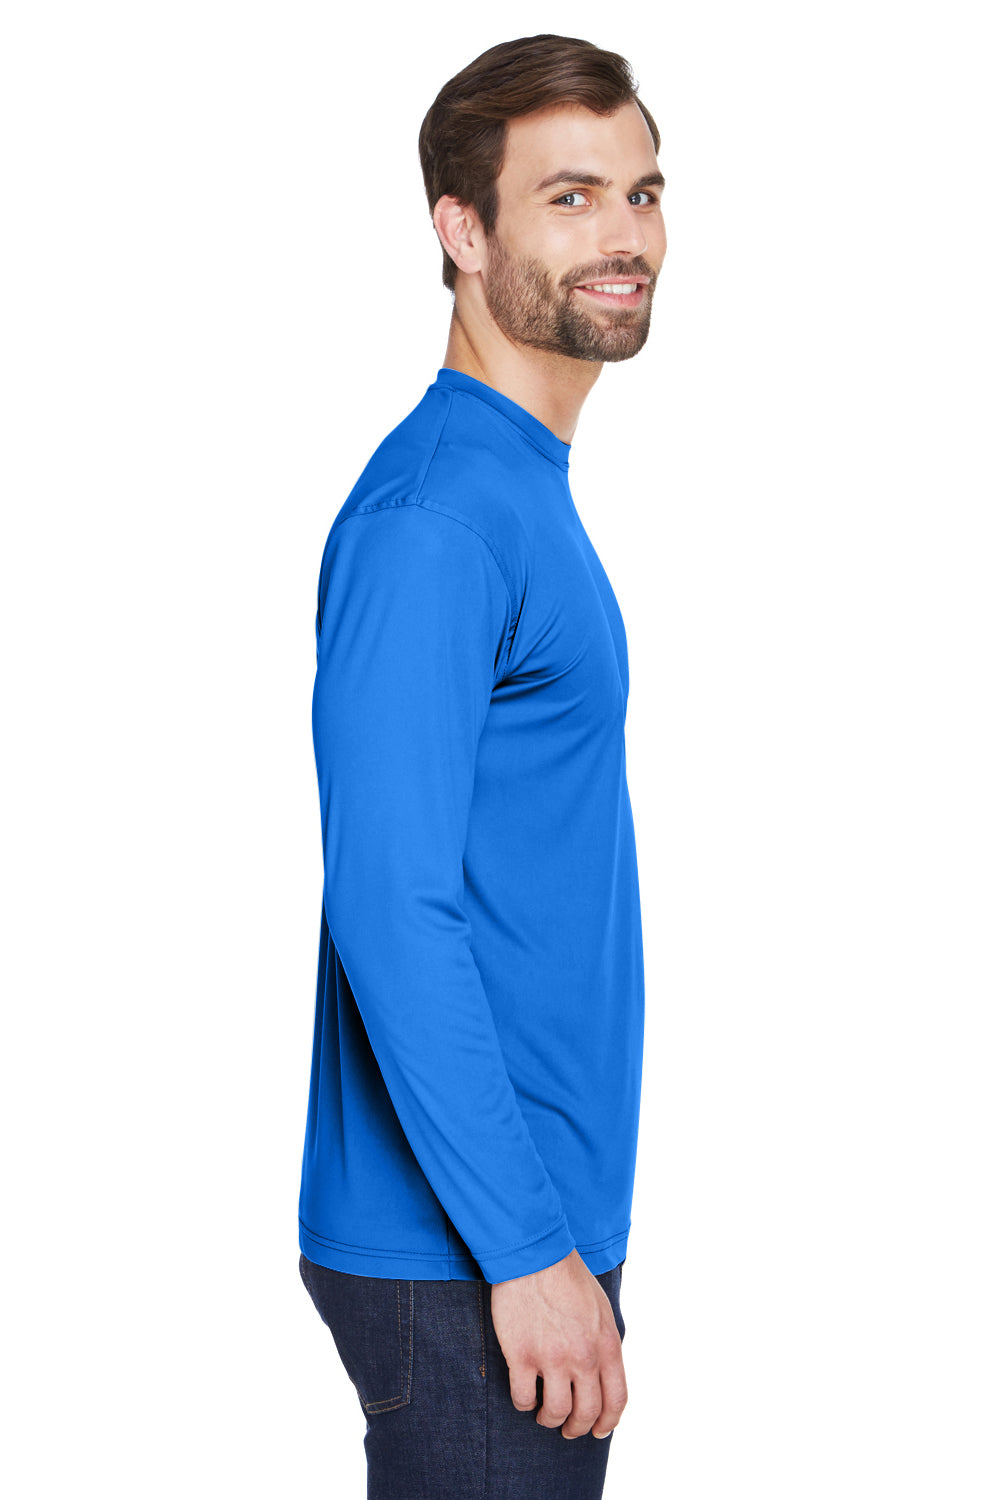 UltraClub 8422 Mens Cool & Dry Performance Moisture Wicking Long Sleeve Crewneck T-Shirt Royal Blue Side